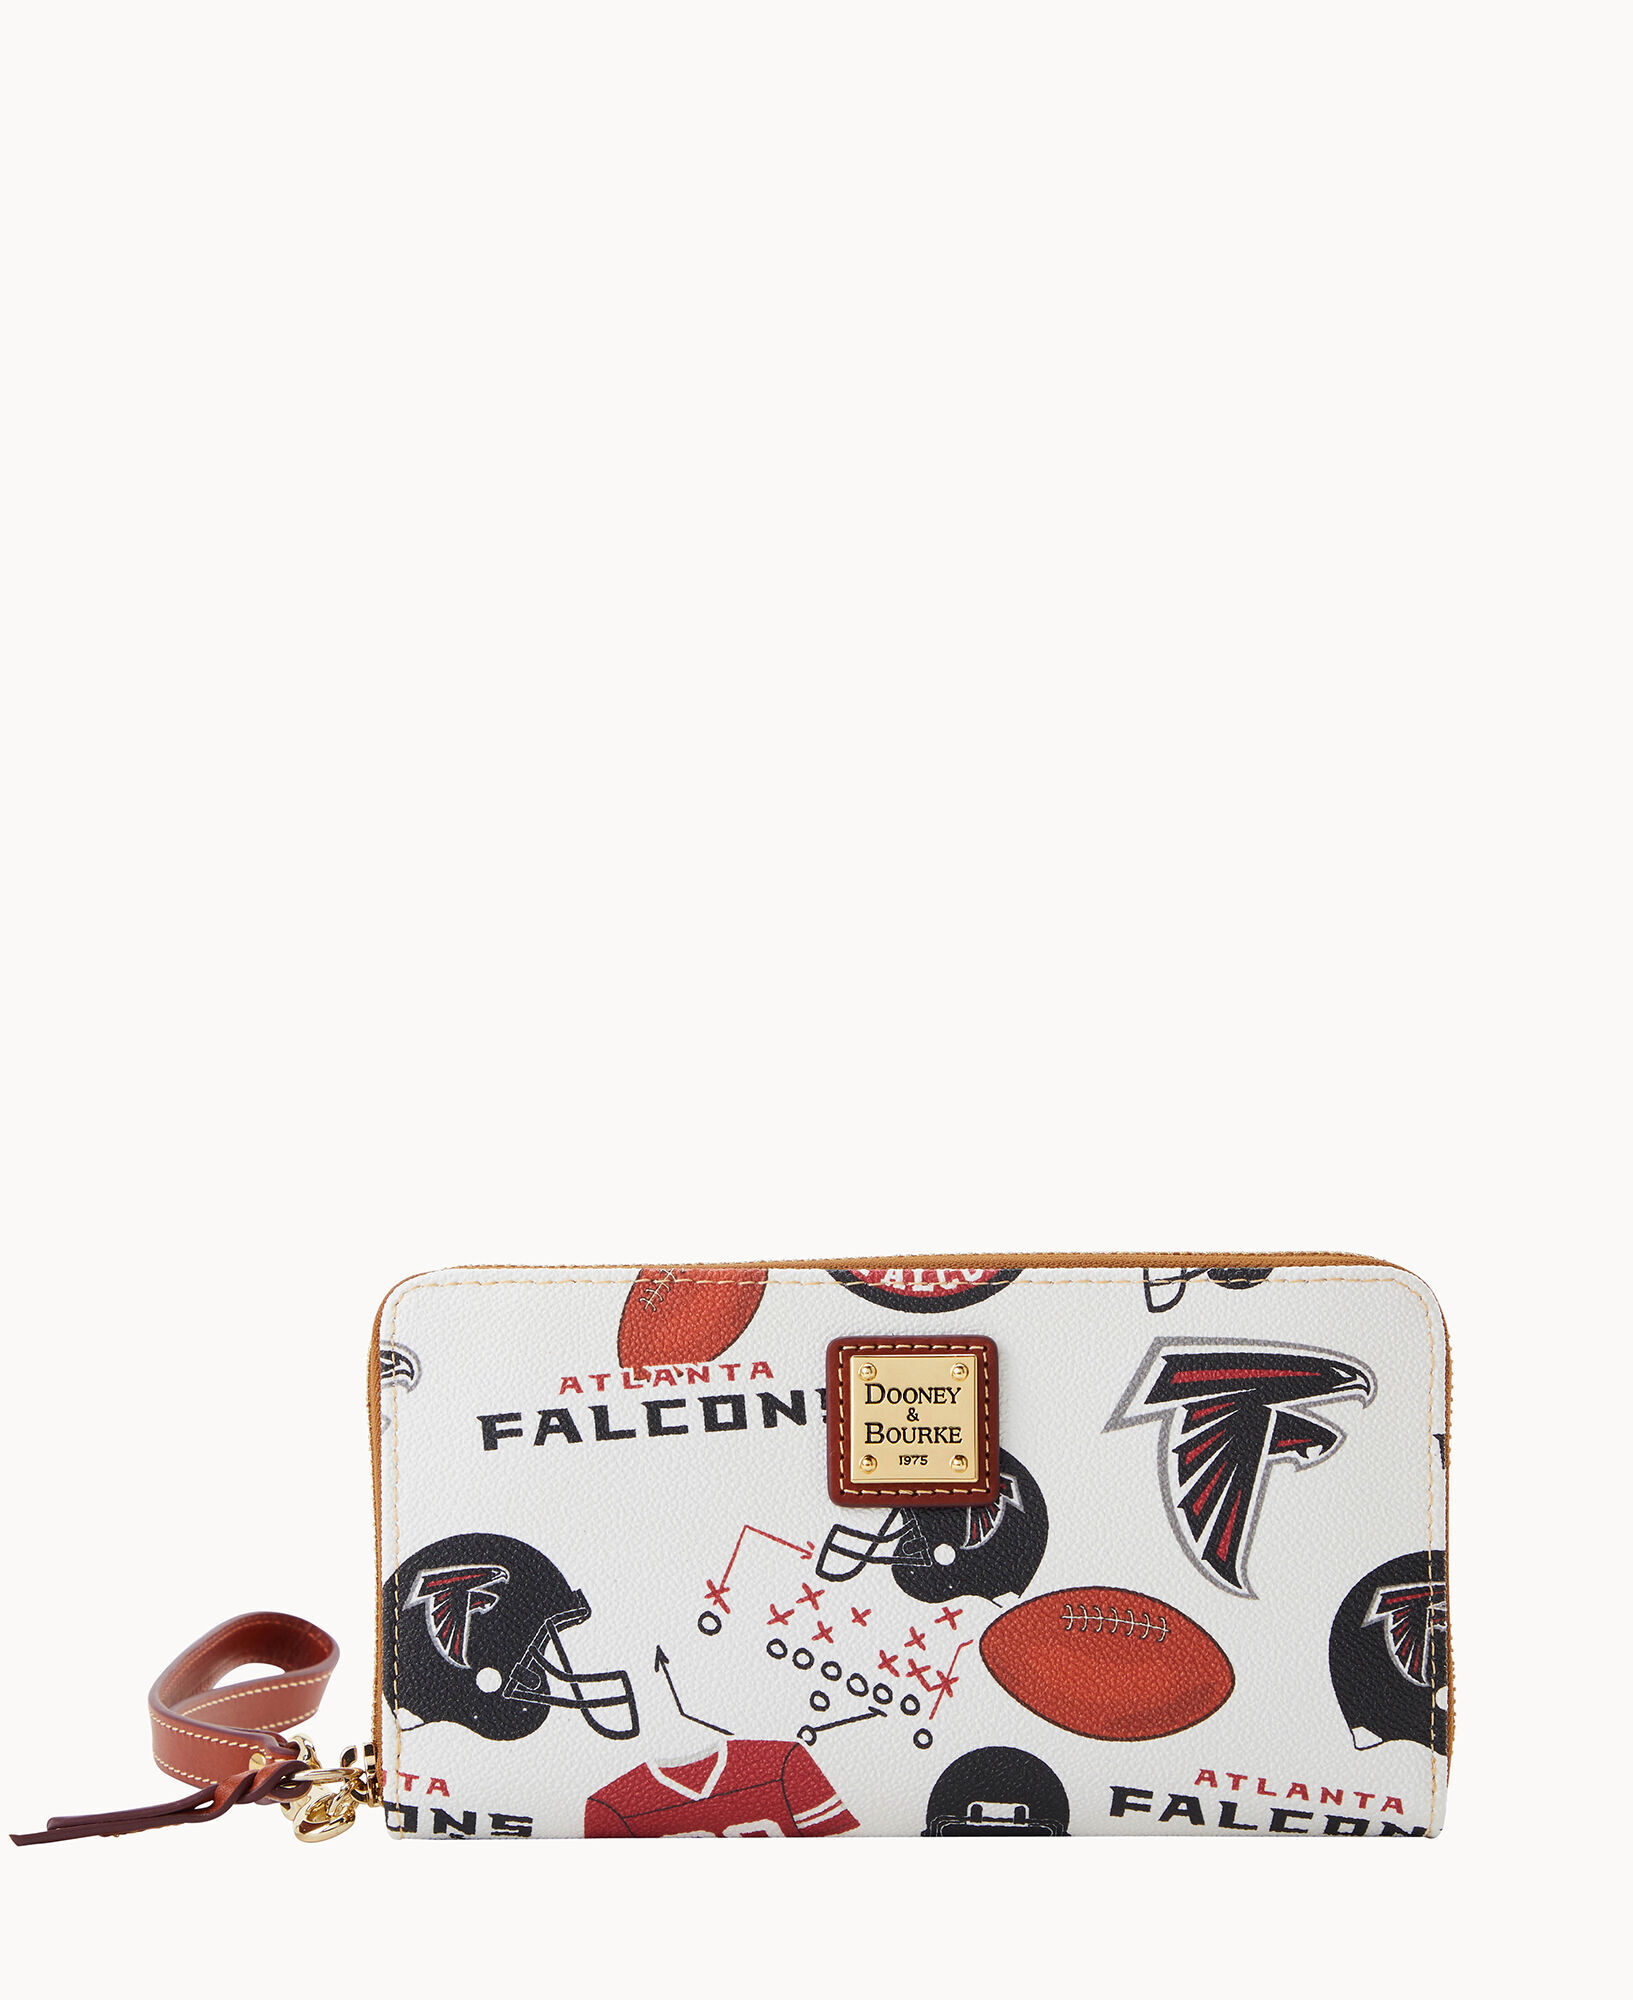 Dooney & Bourke Atlanta Falcons Gameday Drawstring Bag